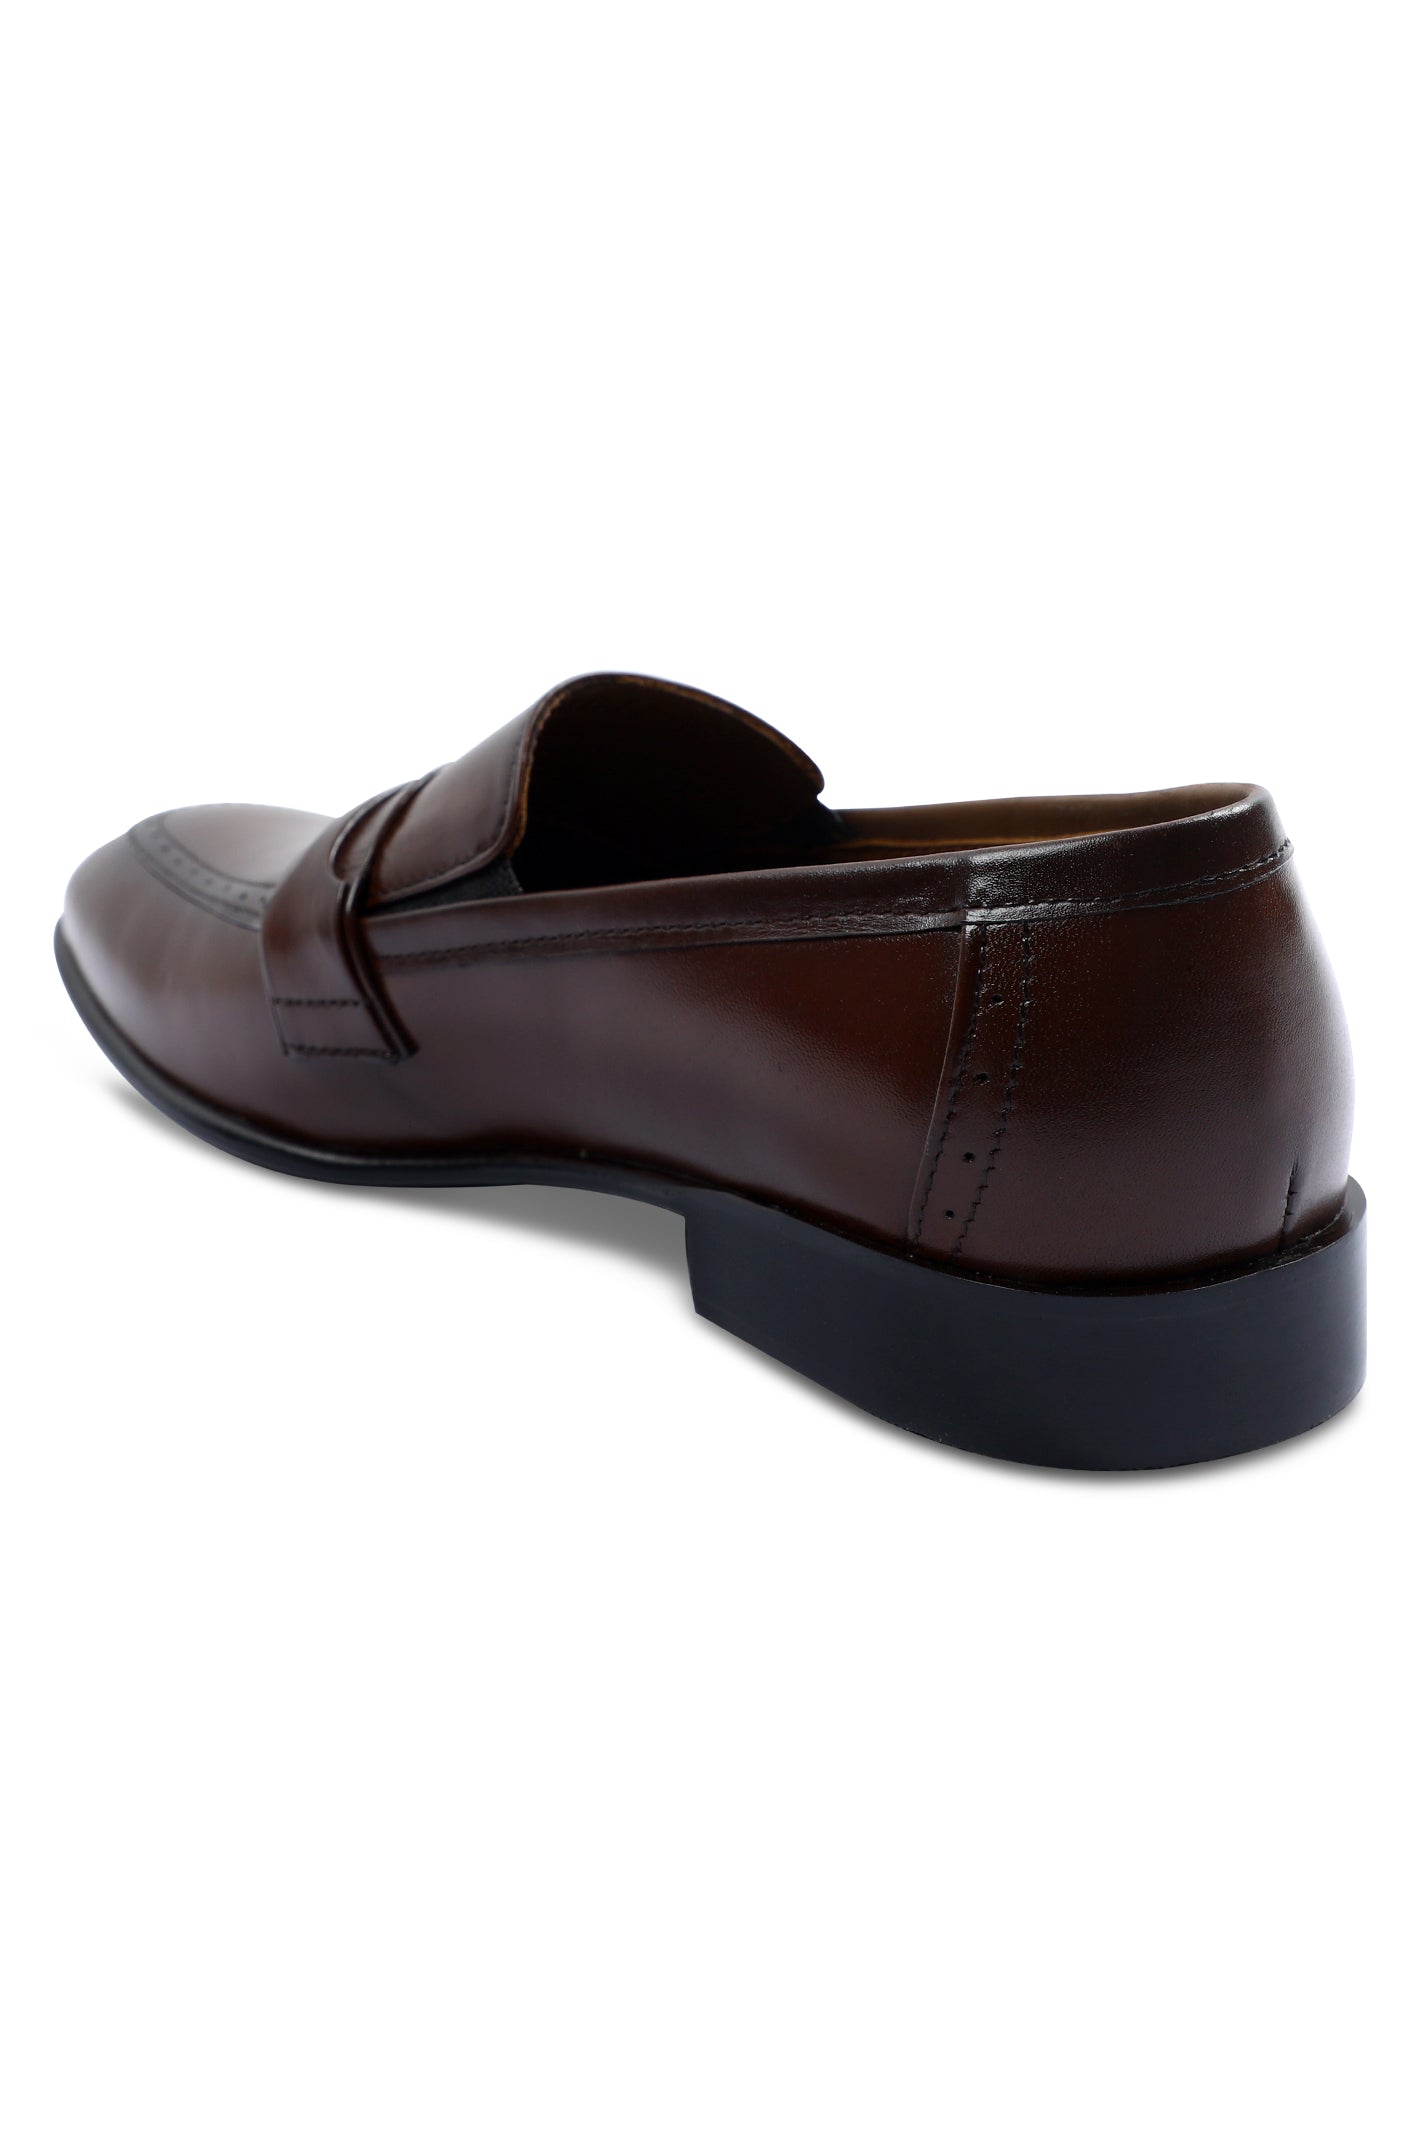 Formal Shoes For Men in Brown SKU: SMF-0182-BROWN - Diners